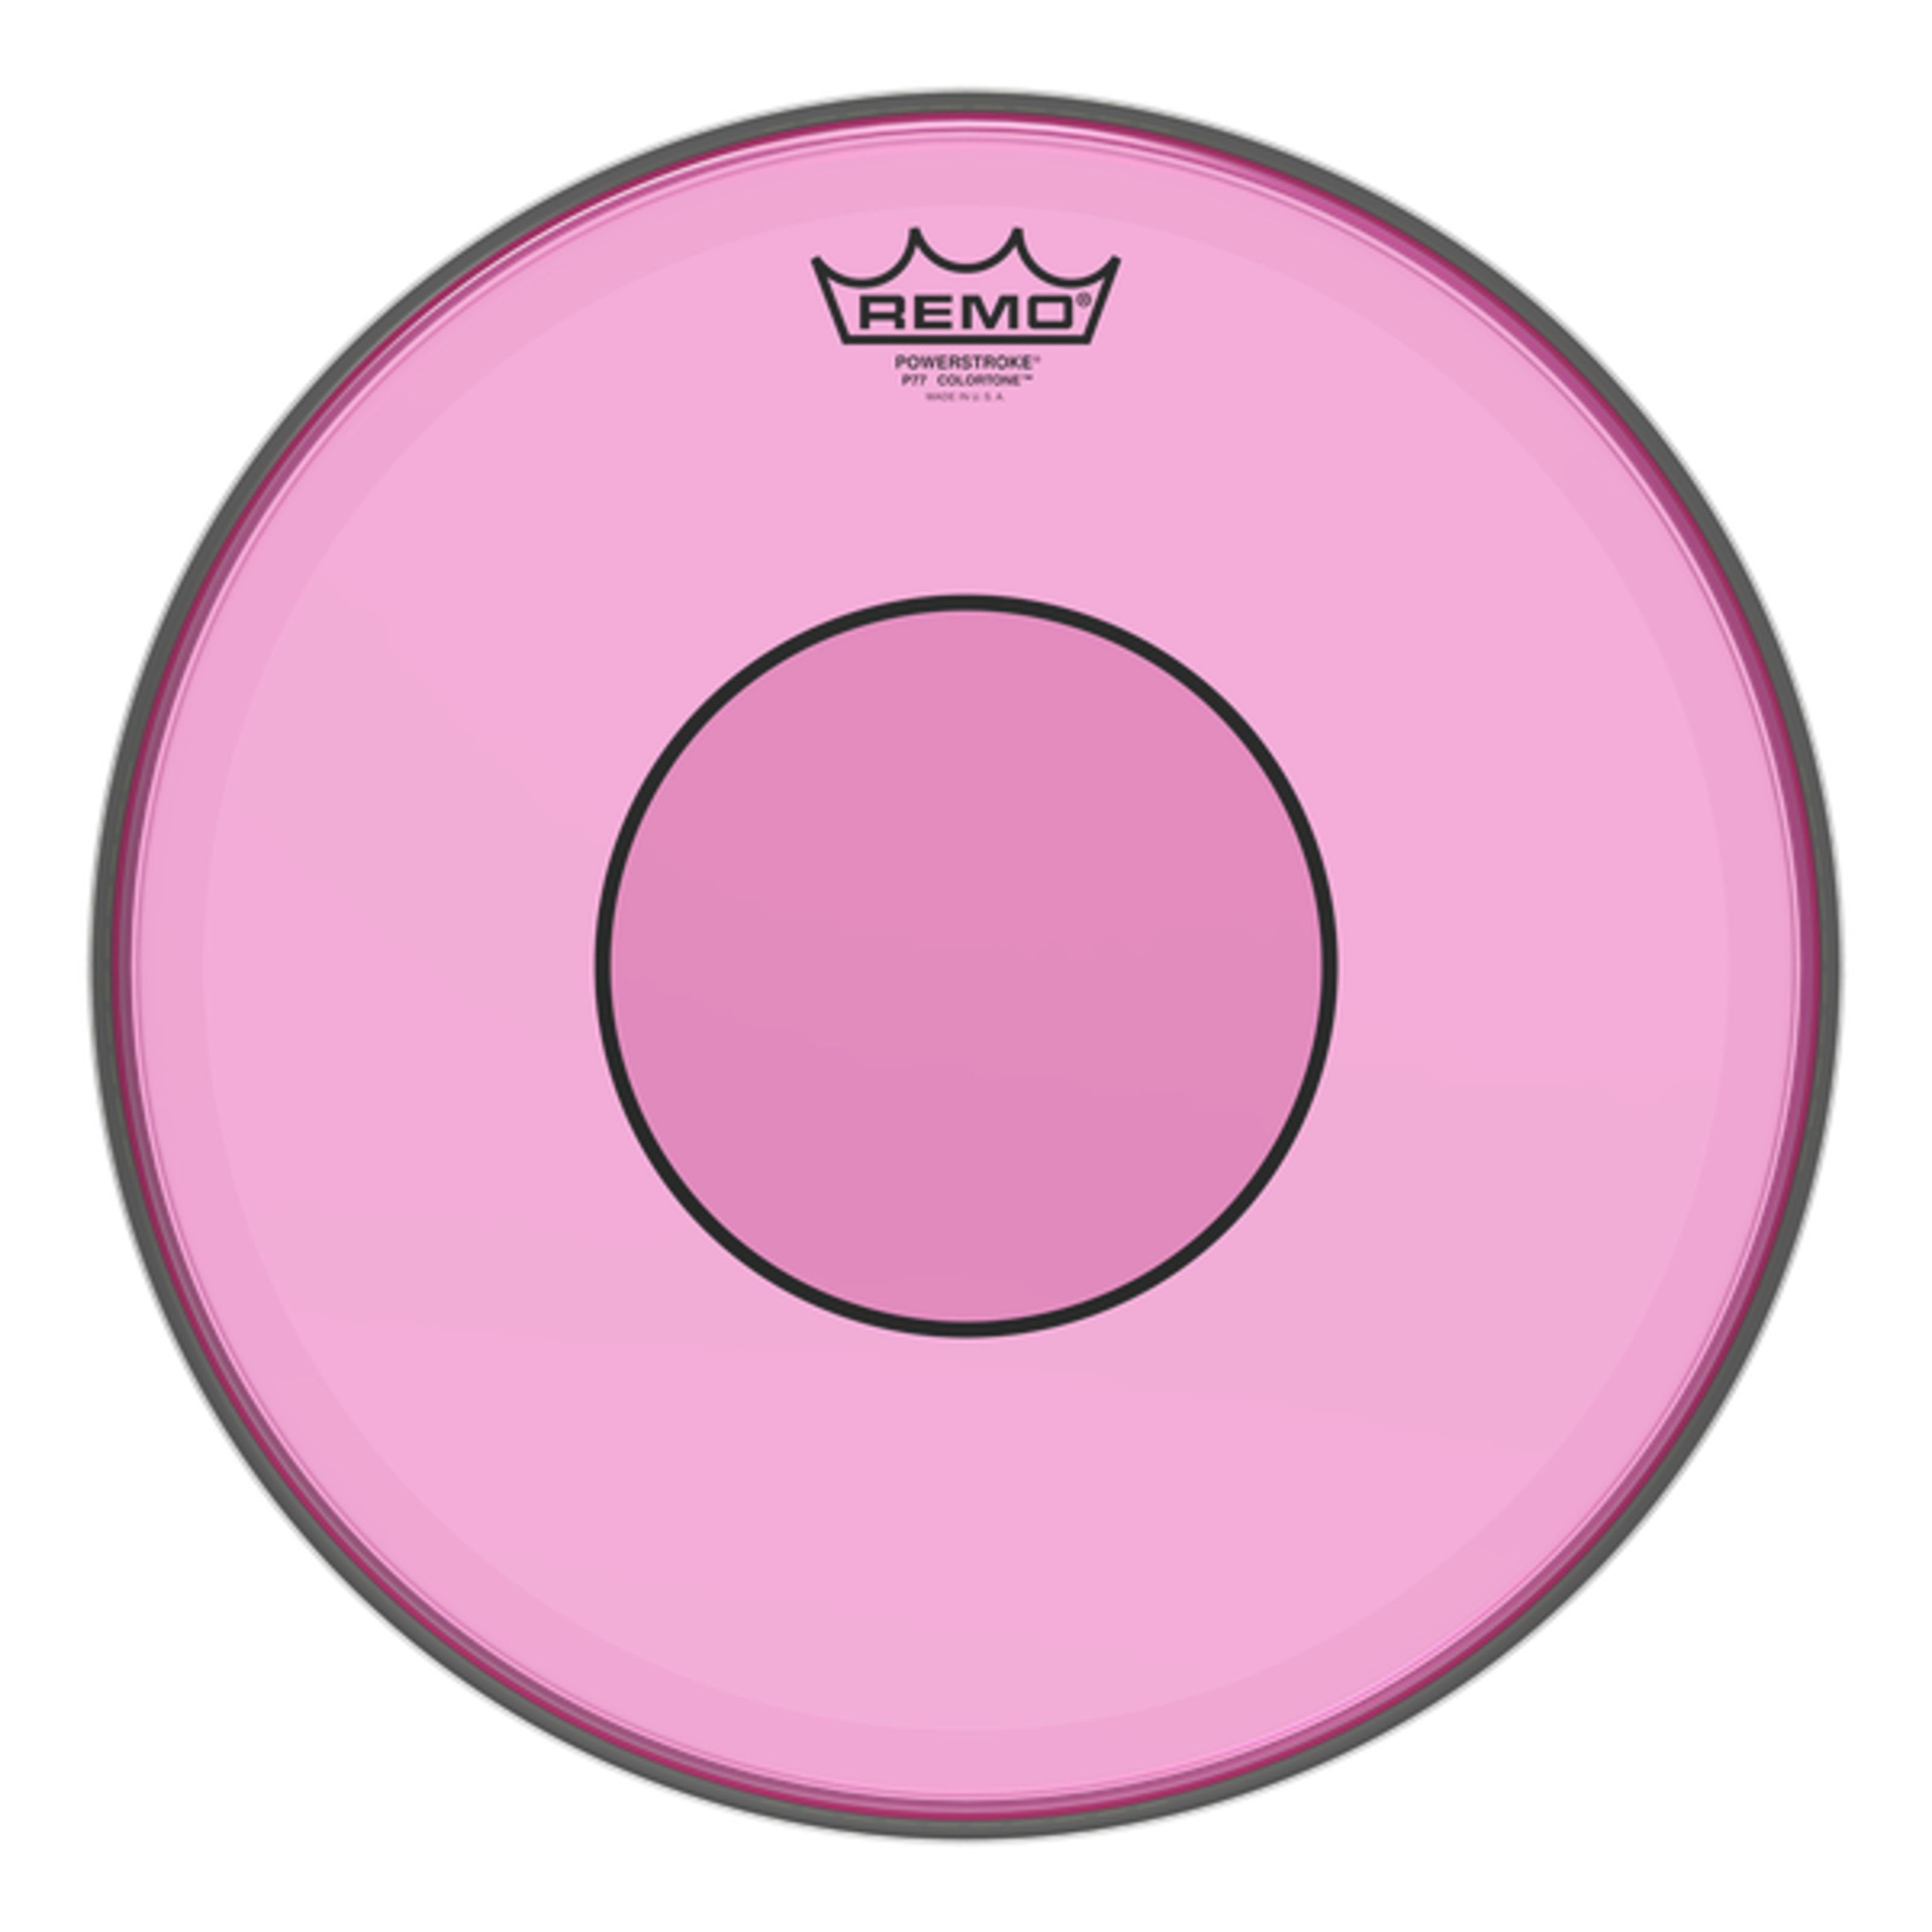 Remo Snare Drum,Powerstroke 77 Colortone 14" Pink, Powerstroke 77 Colortone 14" Pink - Snare Drum Schlagfell